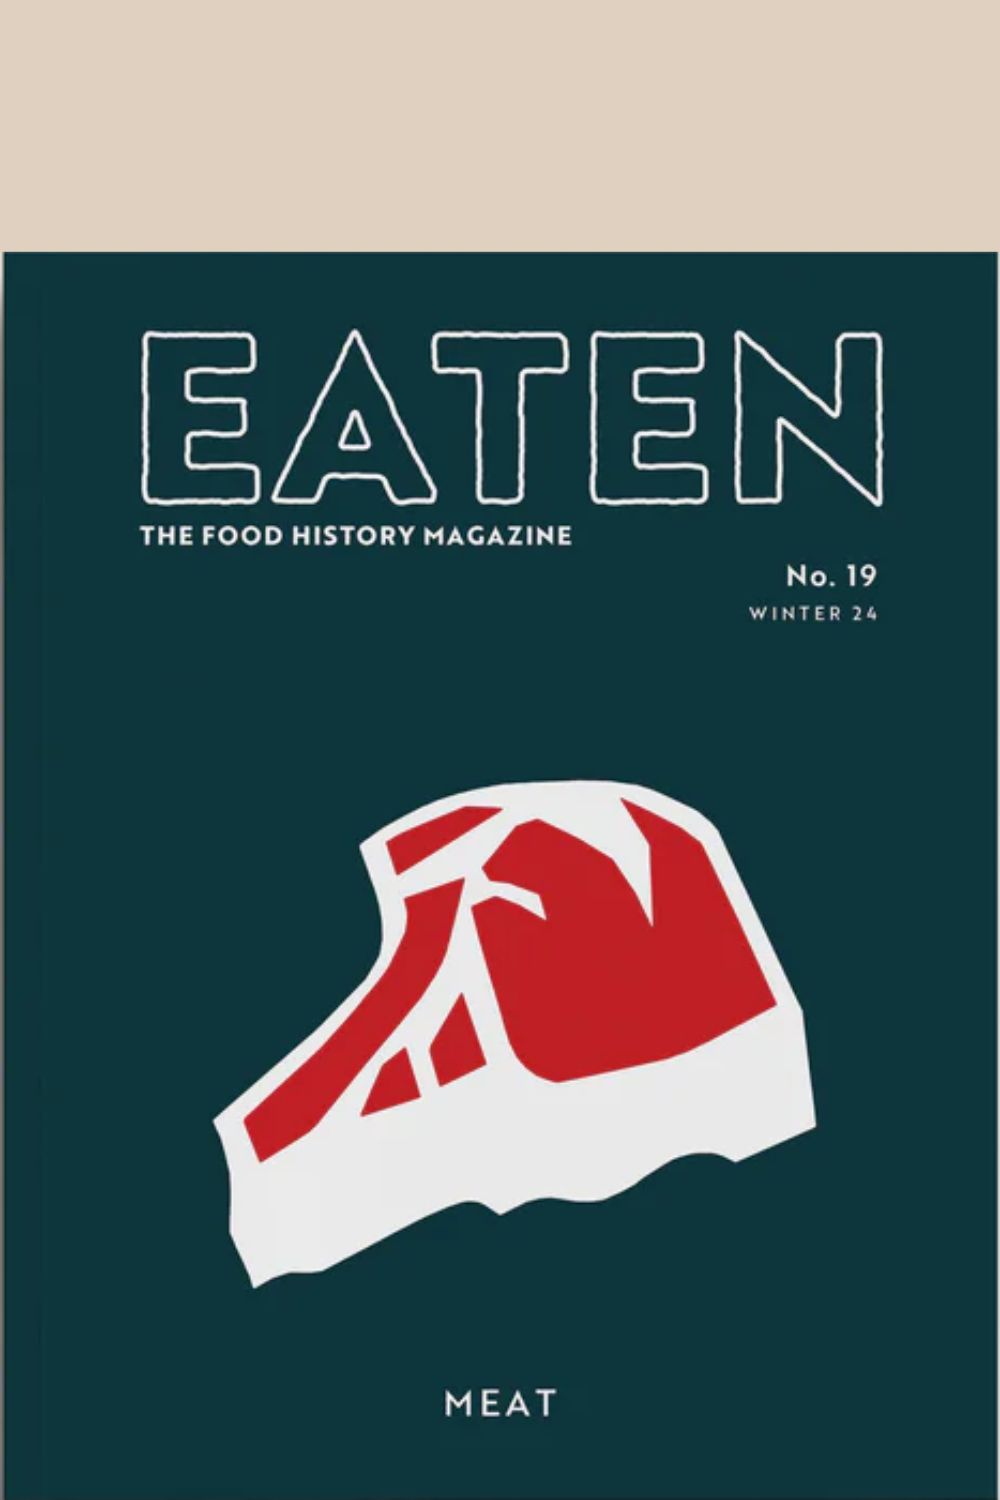 Eaten Magazine Issue 19 cover